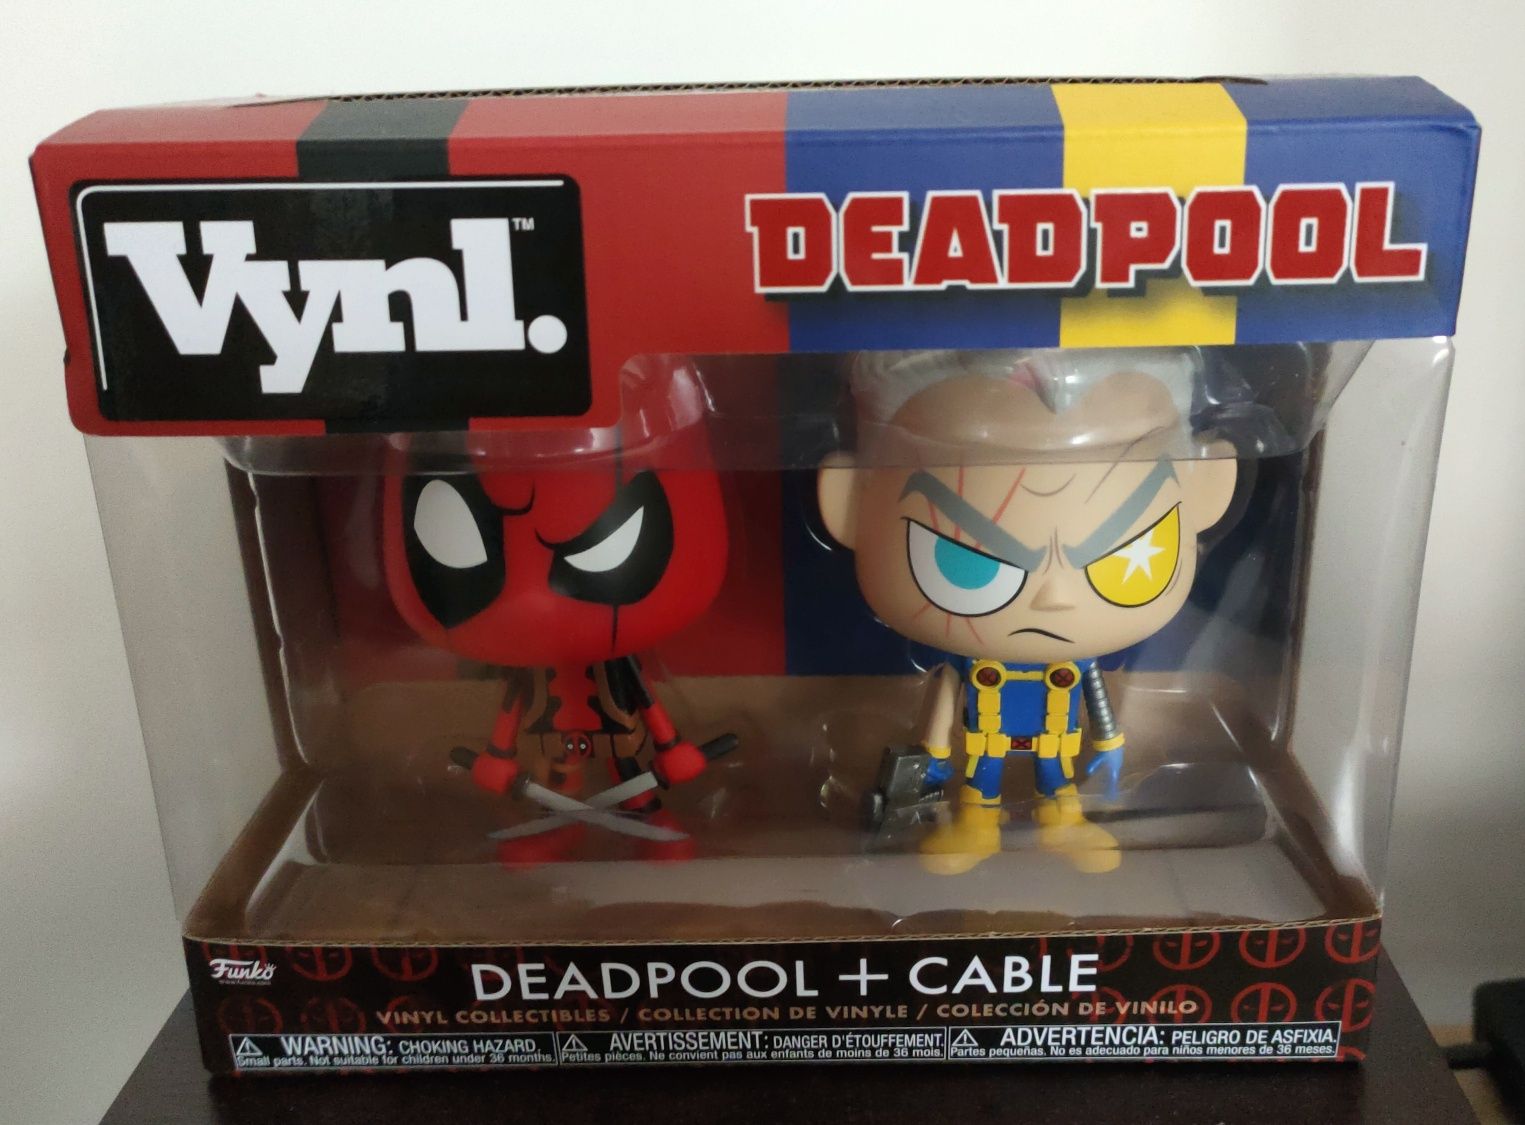 Deadpool and Cable
VYNL 2-Pack Funkopop Pop komiks figurka Marvel